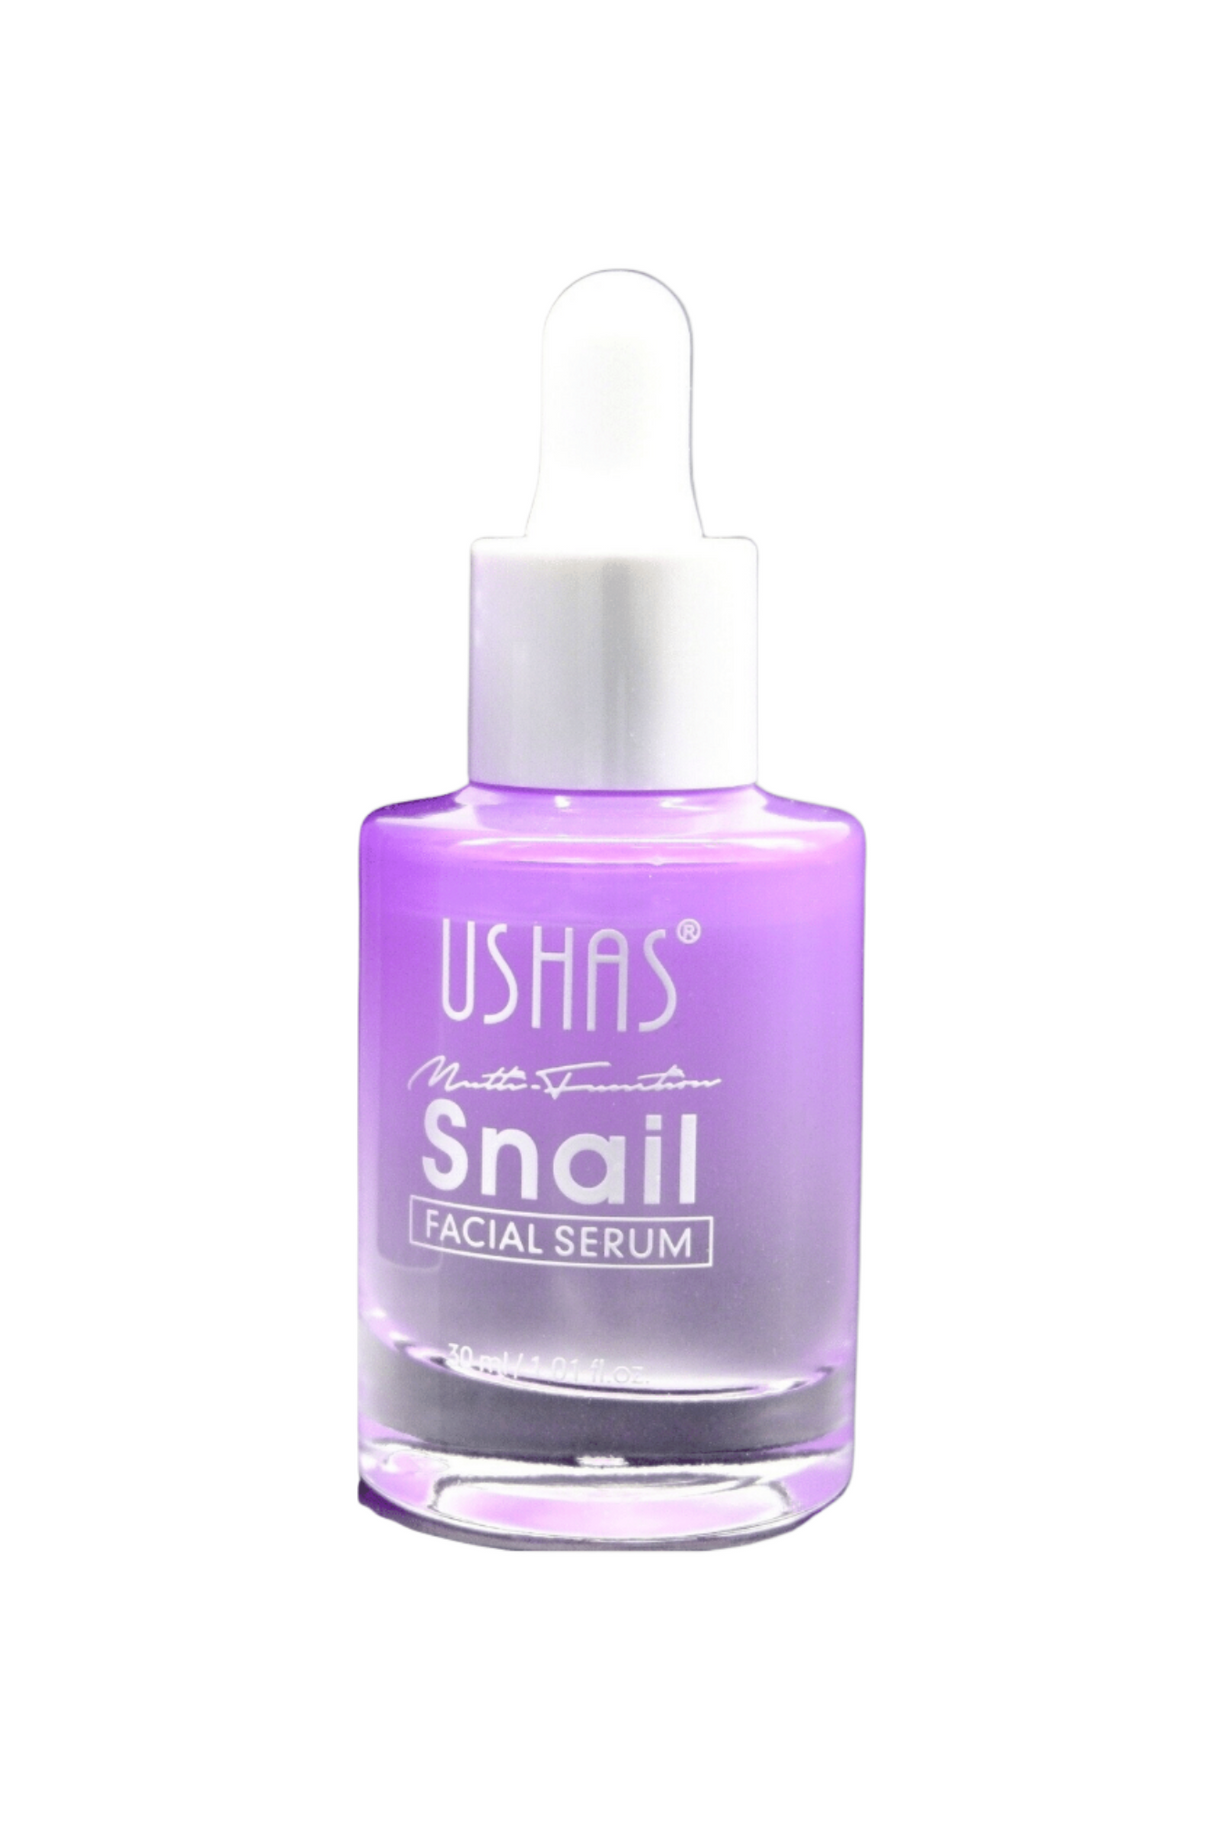 ushas face serum snail 30ml